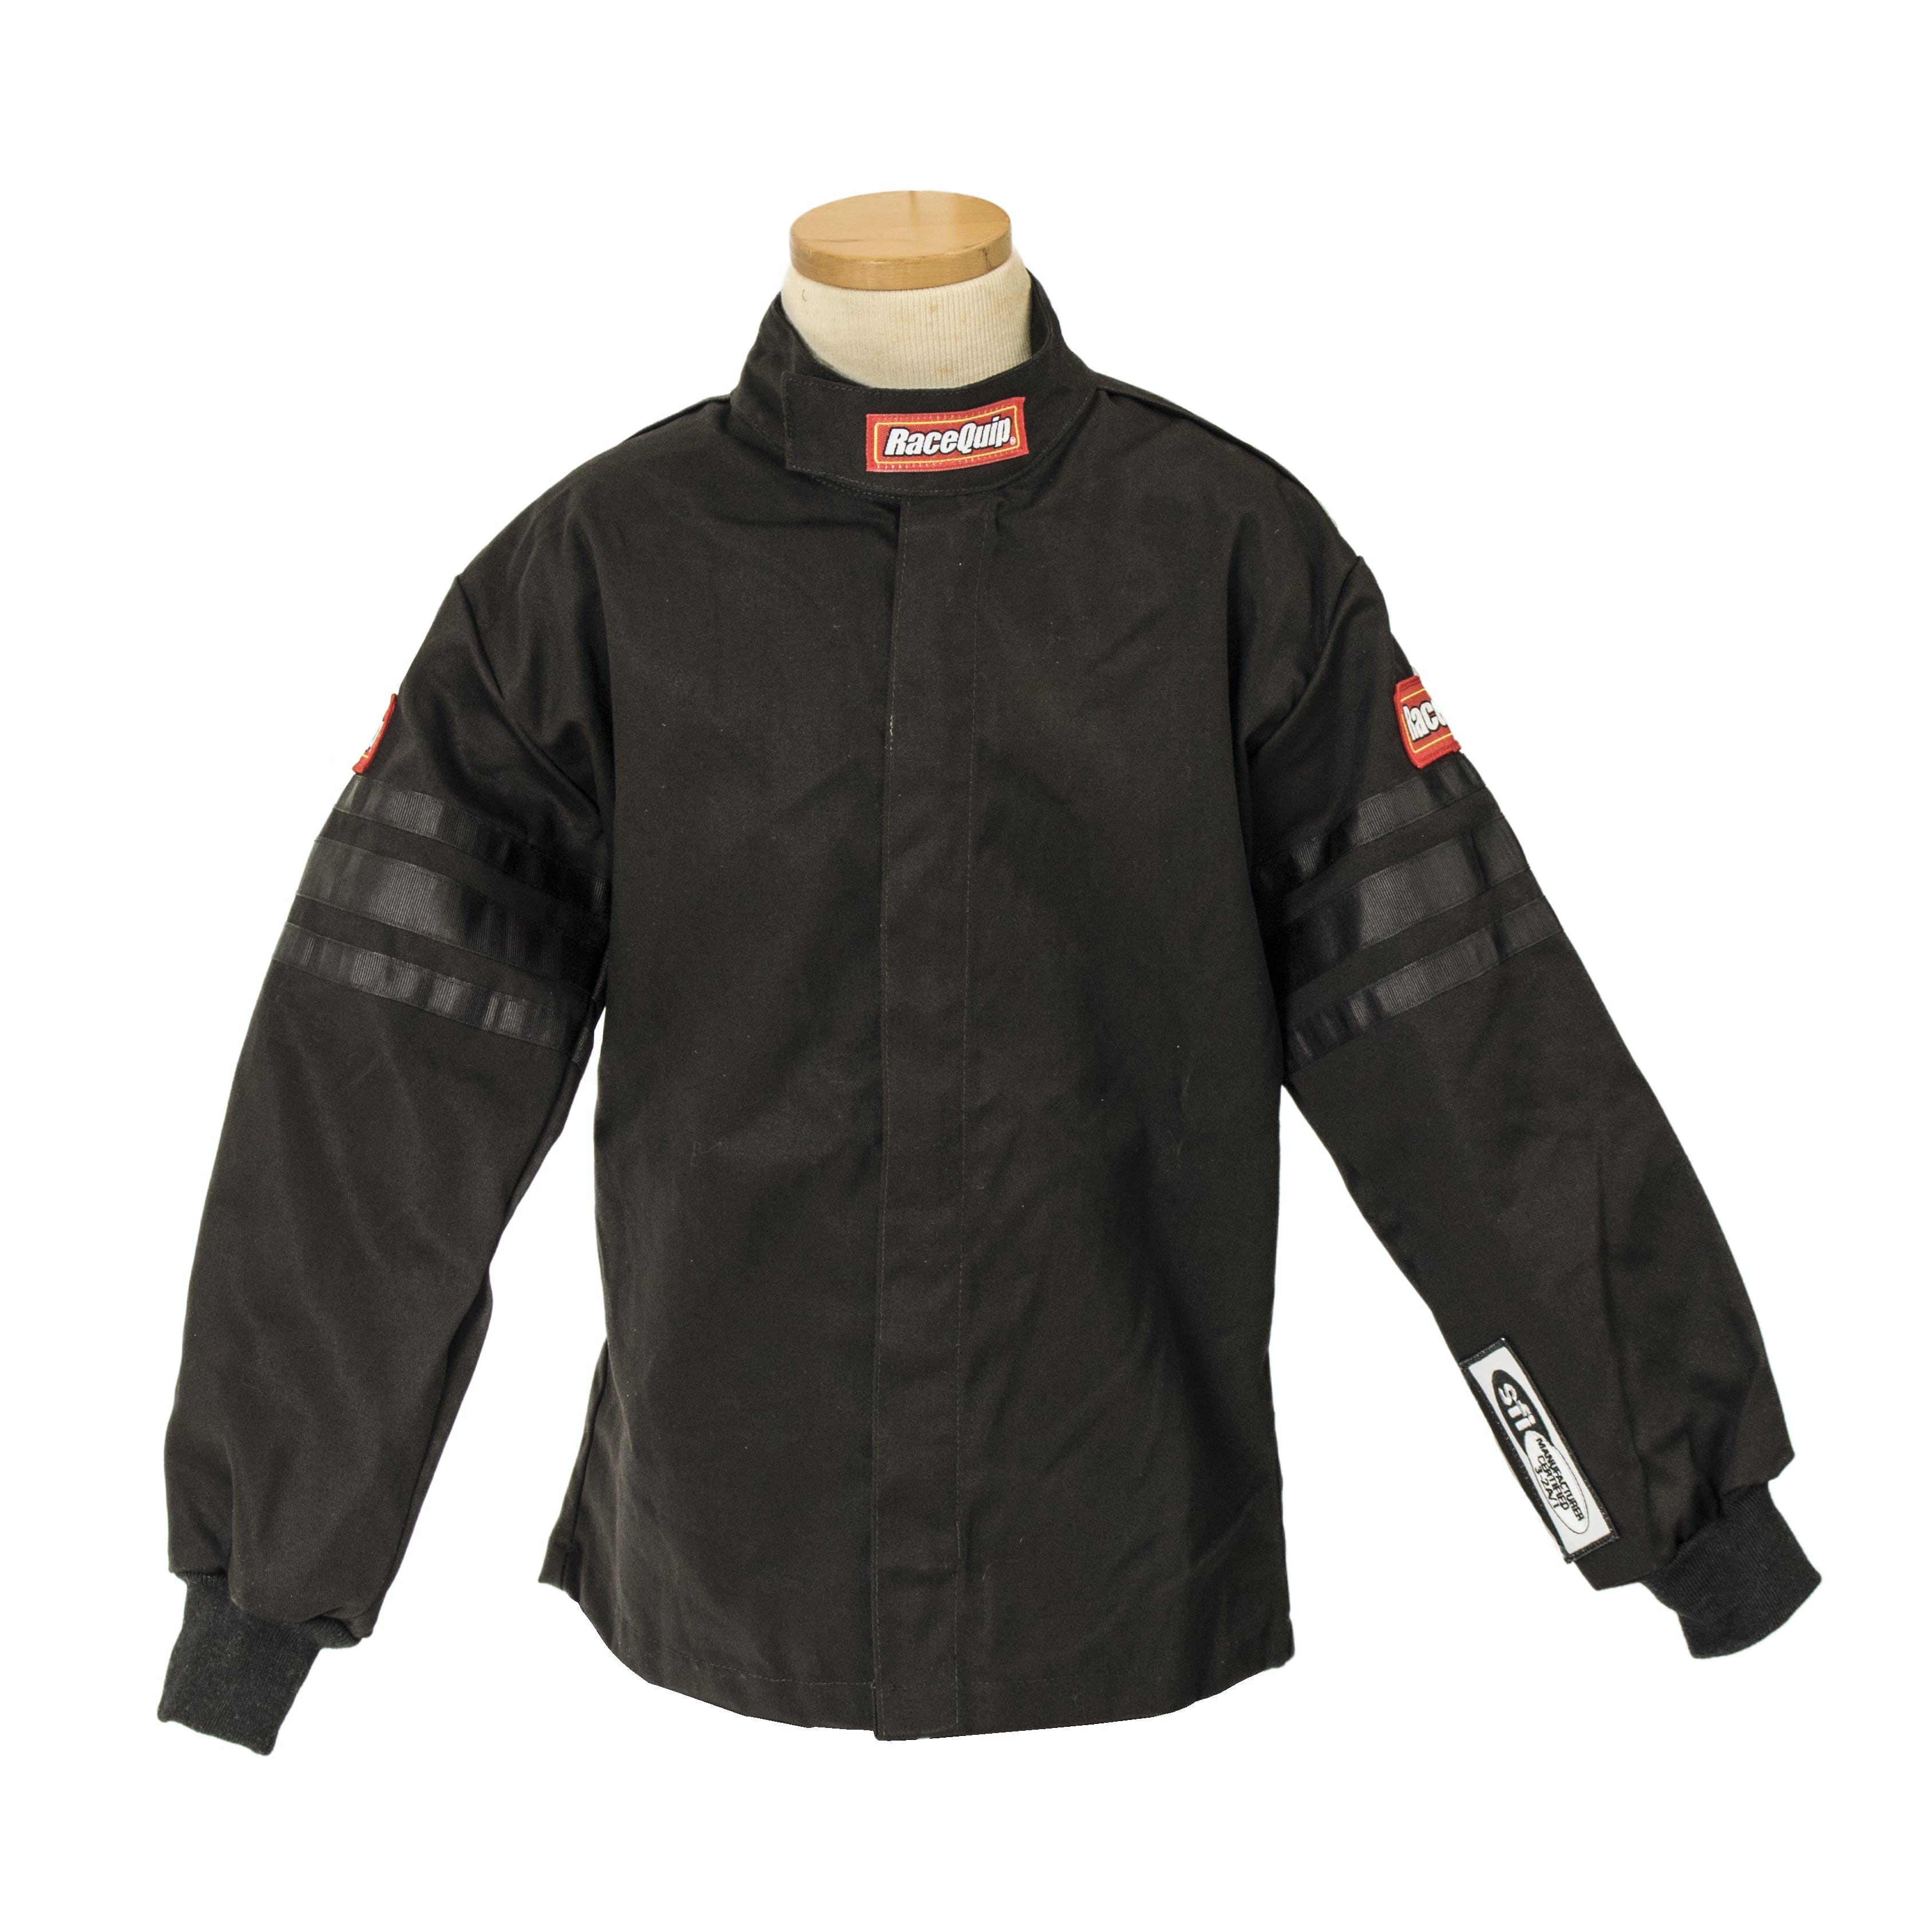 RaceQuip 1969993 SFI-1 Pyrovatex Single-Layer Youth Racing Fire Jacket (Black, Medium)